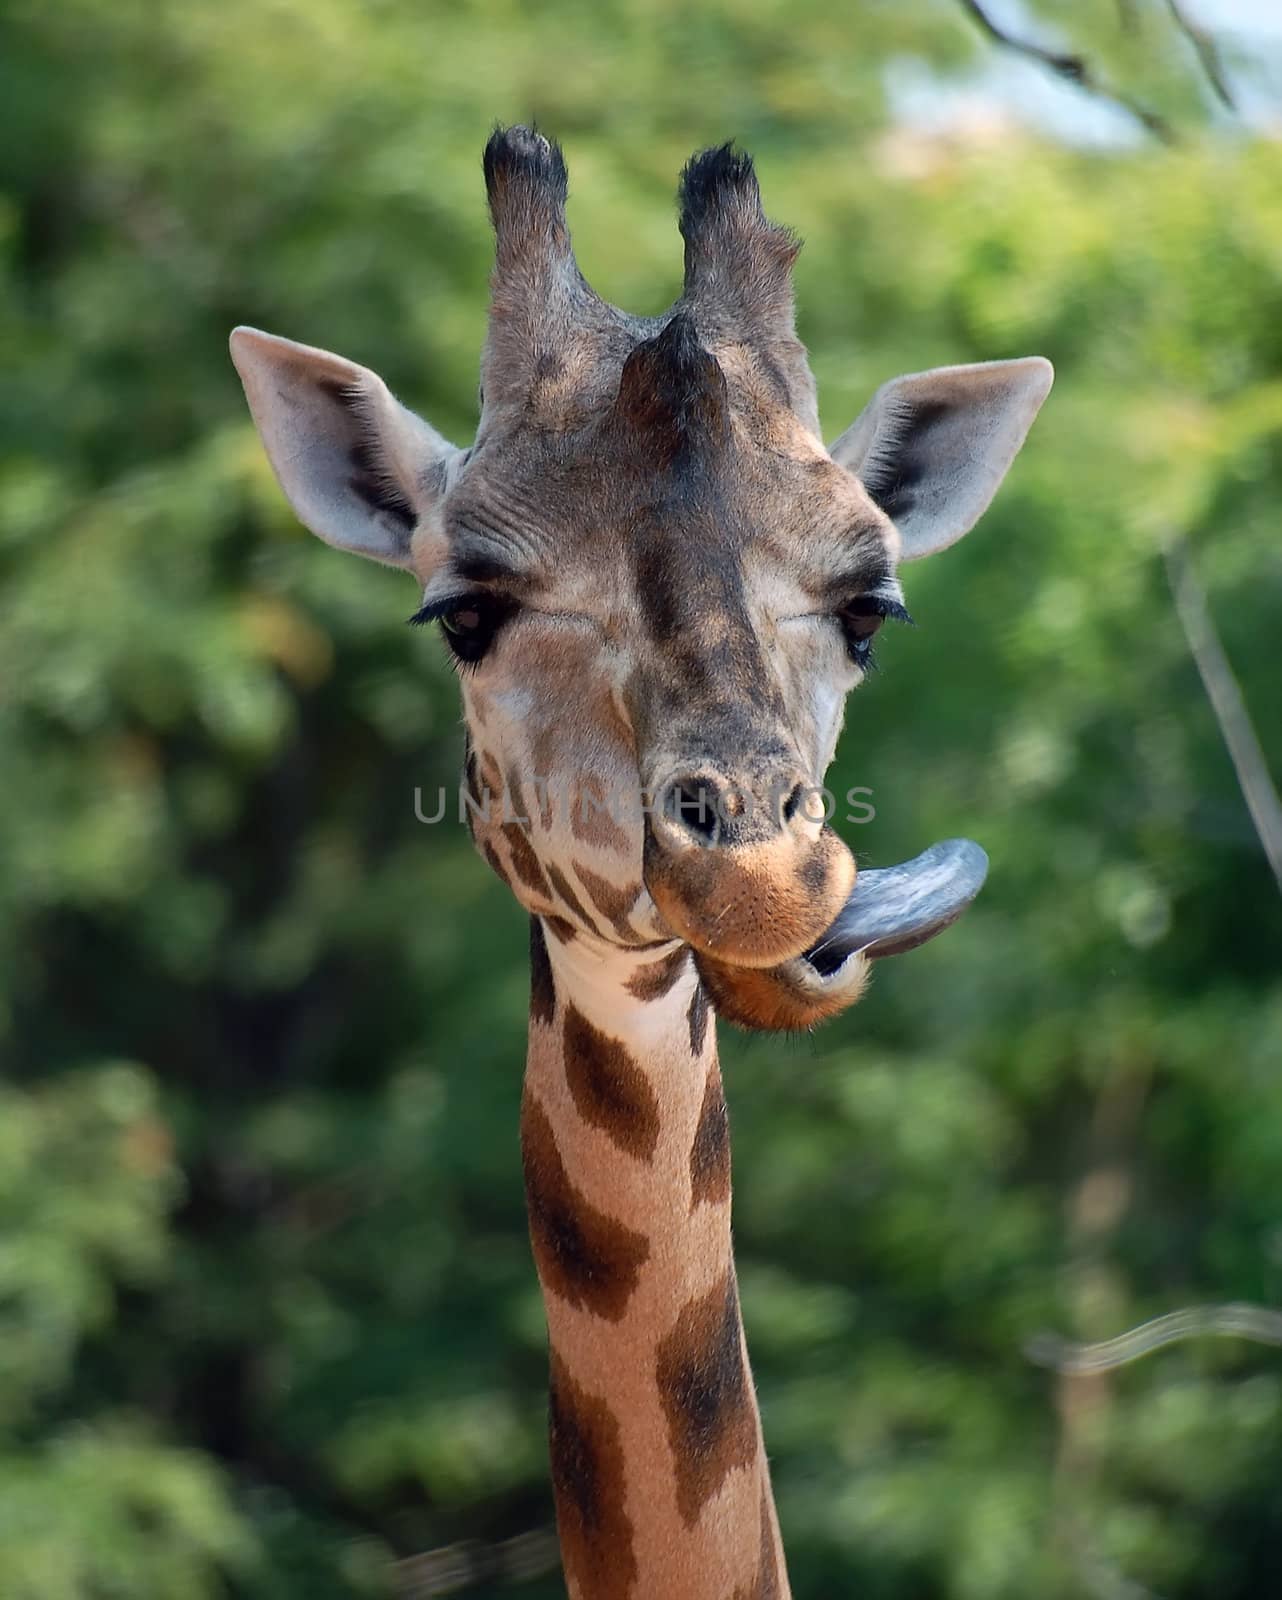 Giraffe (Giraffa camelopardalis)  by nialat